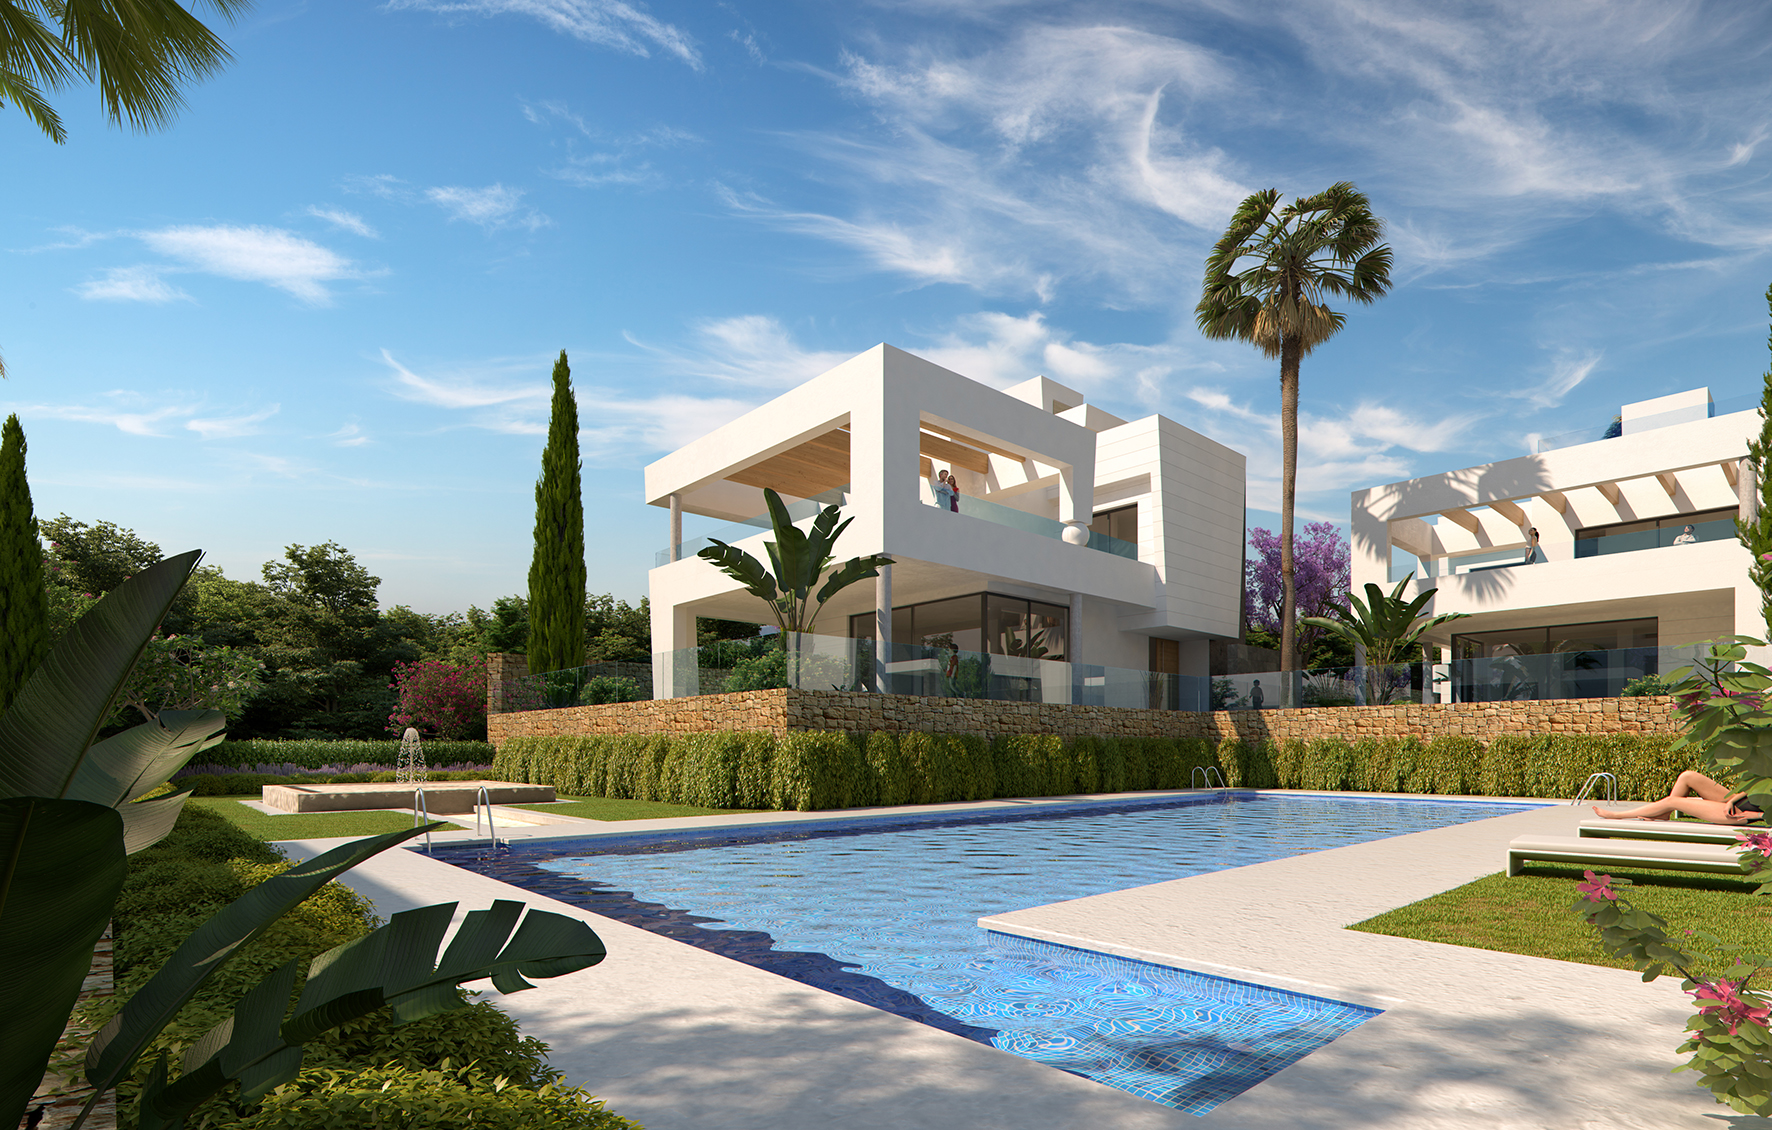 Perlas del Mar, villa project dicht bij het strand en San Pedro, in de buurt van Marbella